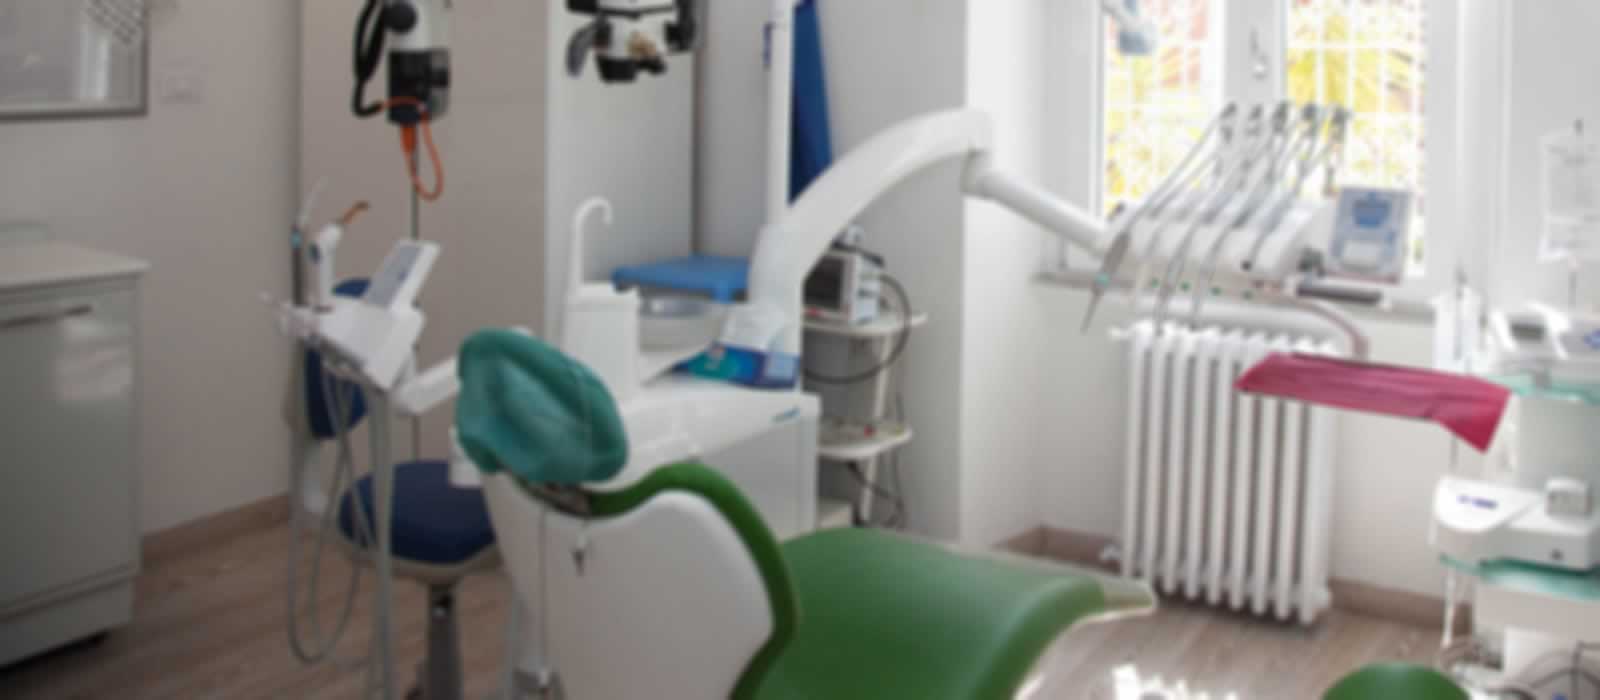 Implantologia Dentale Roma